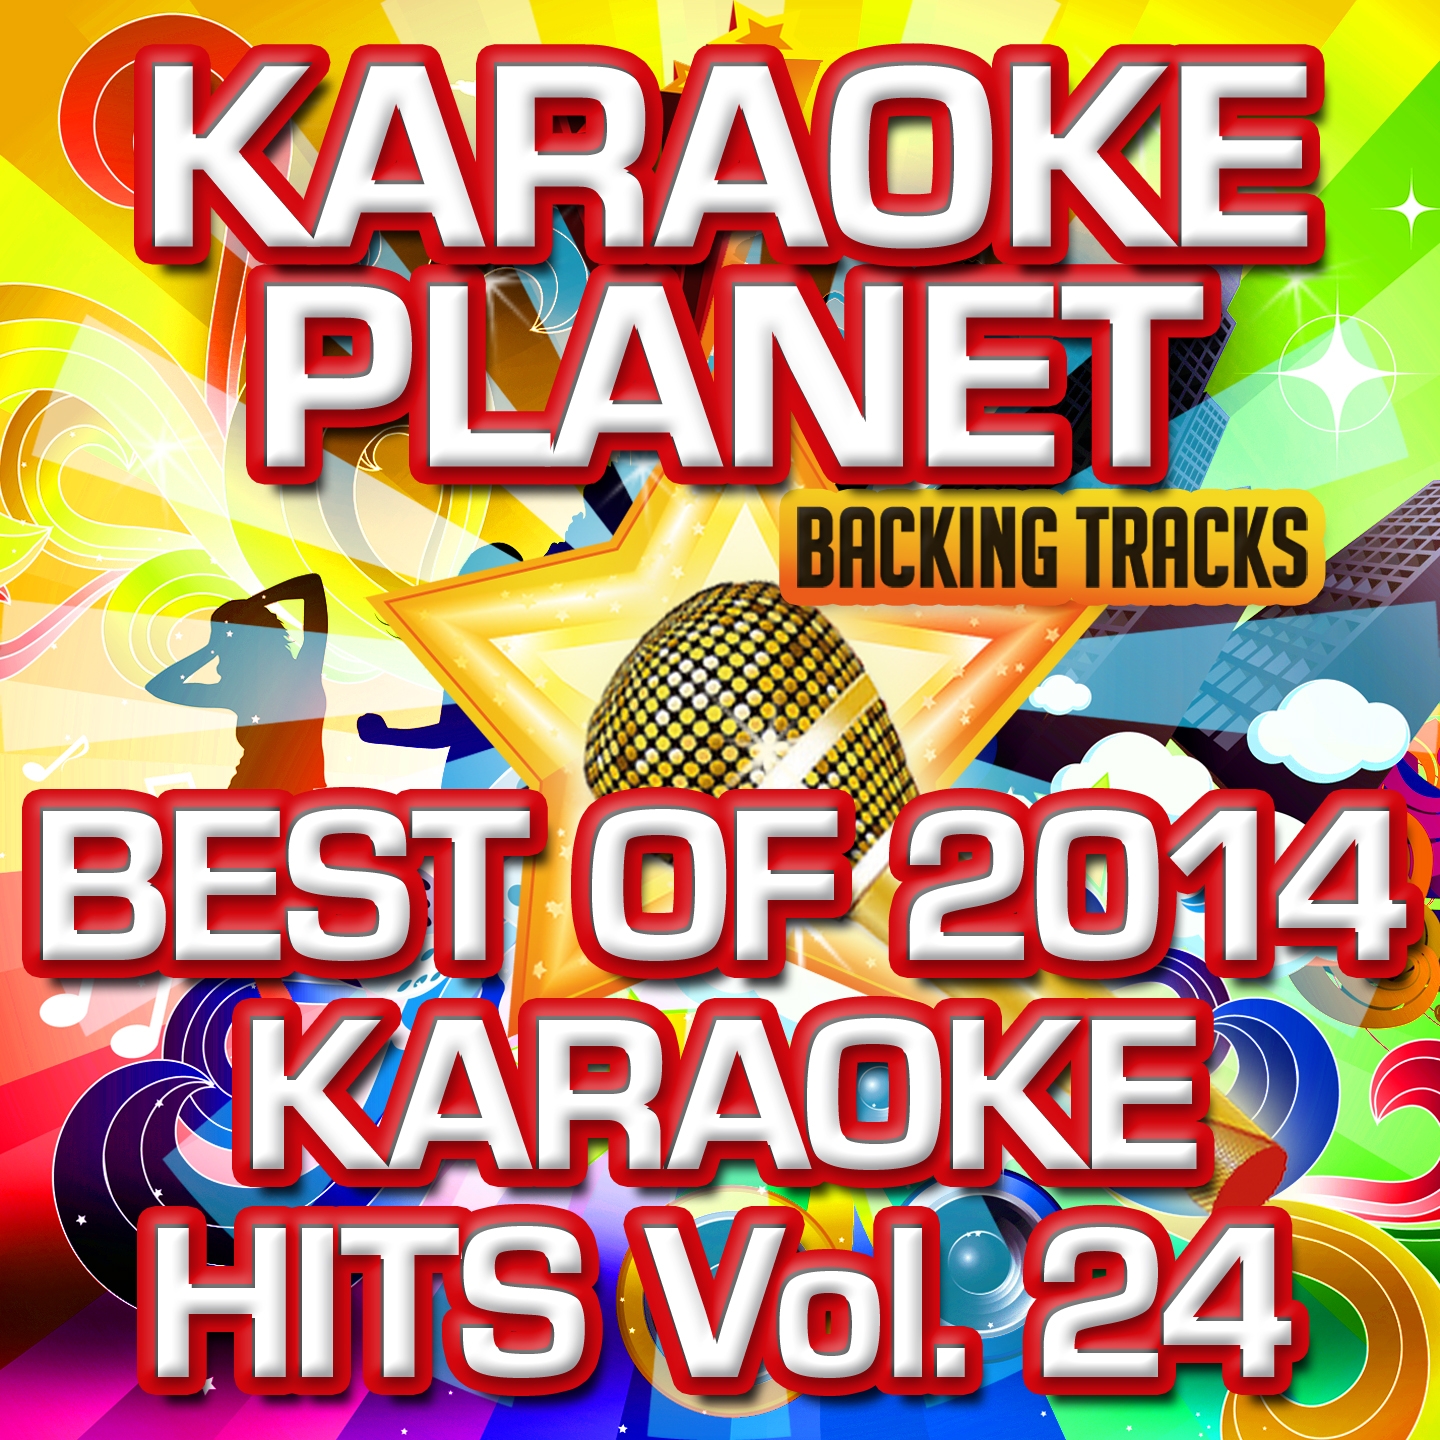 Best of 2014 Karaoke Hits, Vol. 24